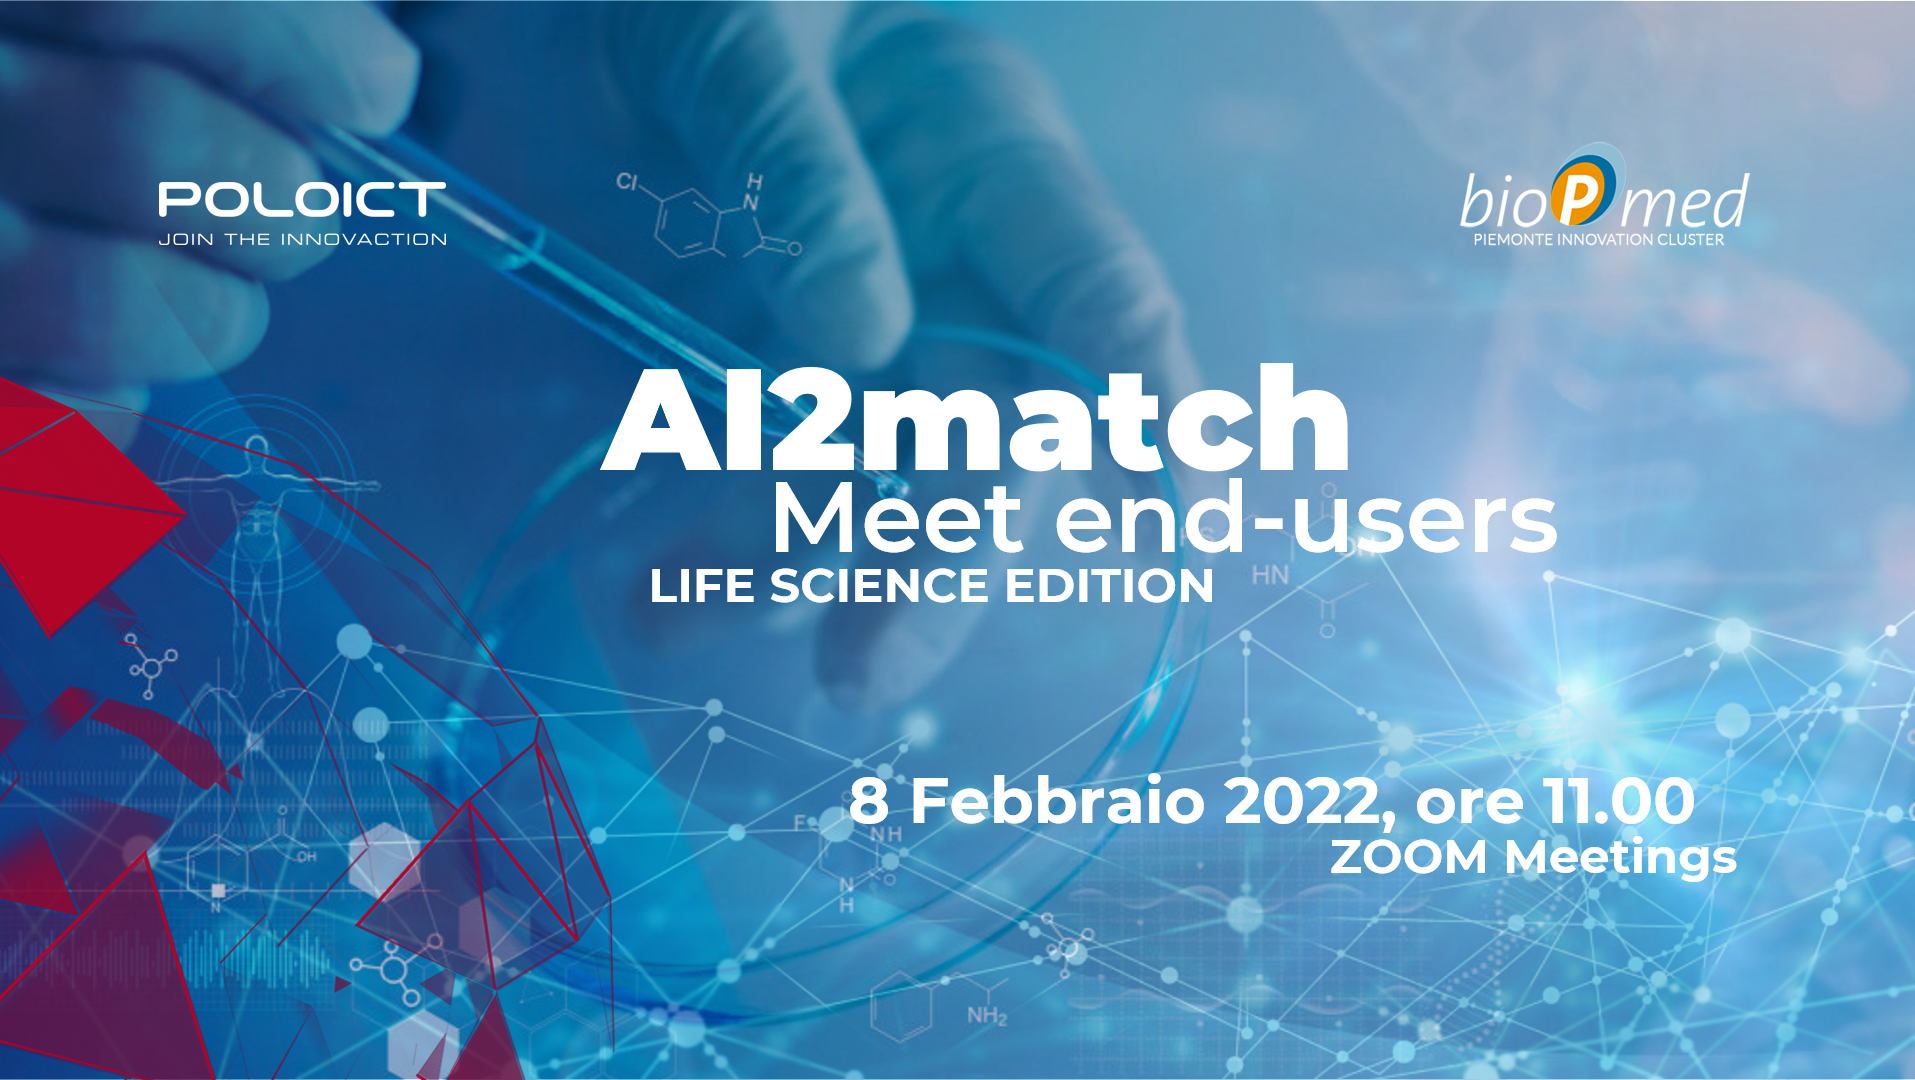 AI2match – Life Science Edition